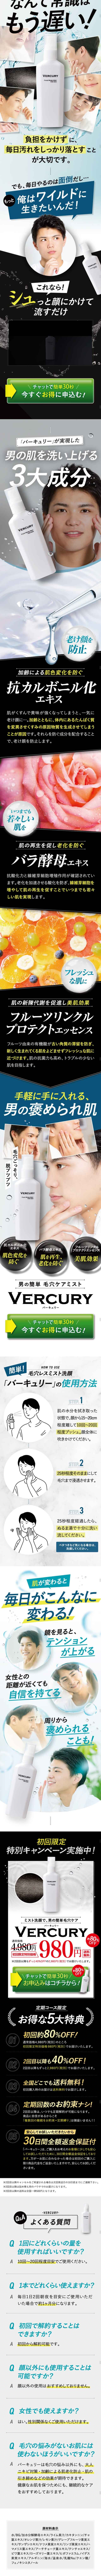 VERCURY_sp_2